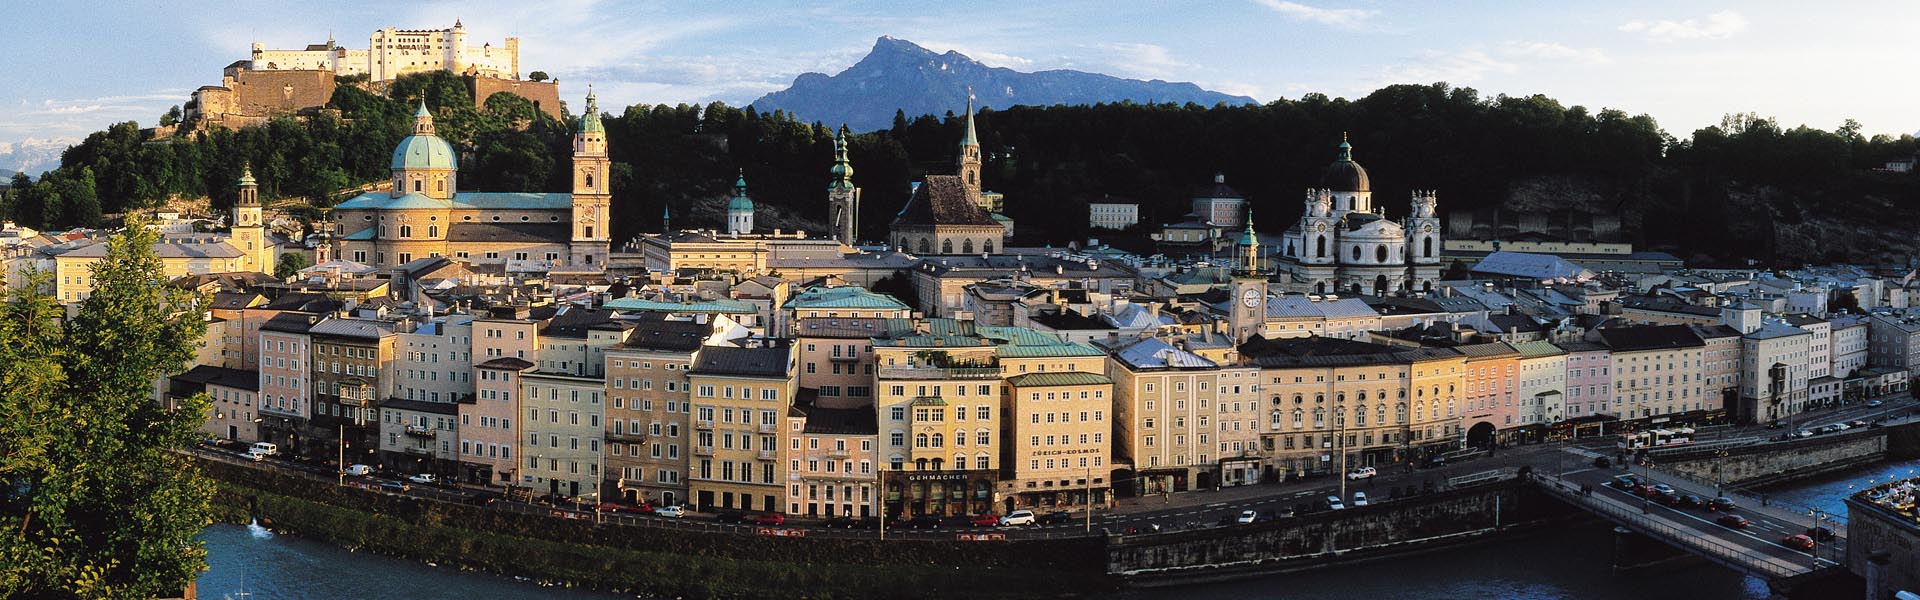 Old Town of Salzburg